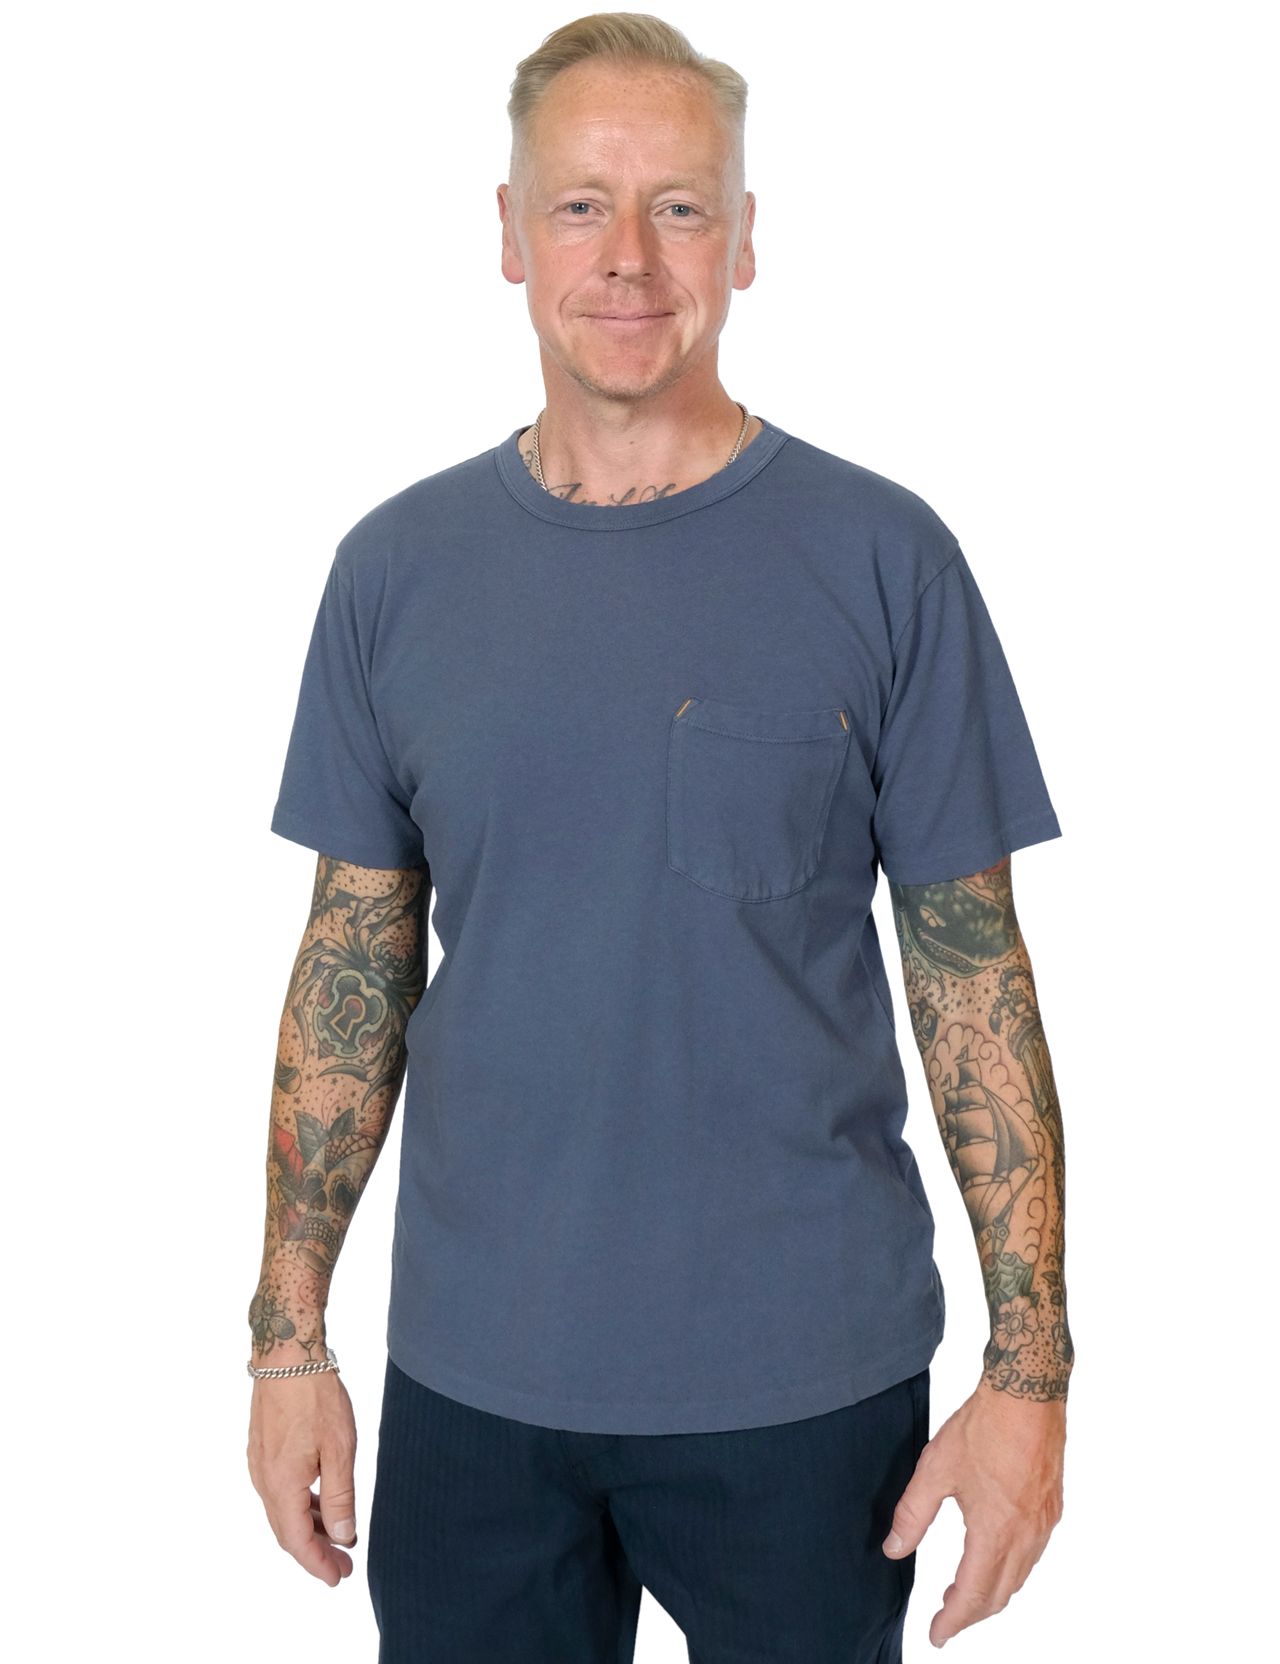 Freenote Cloth - 9 Ounce Pocket T-Shirt - Faded Blue